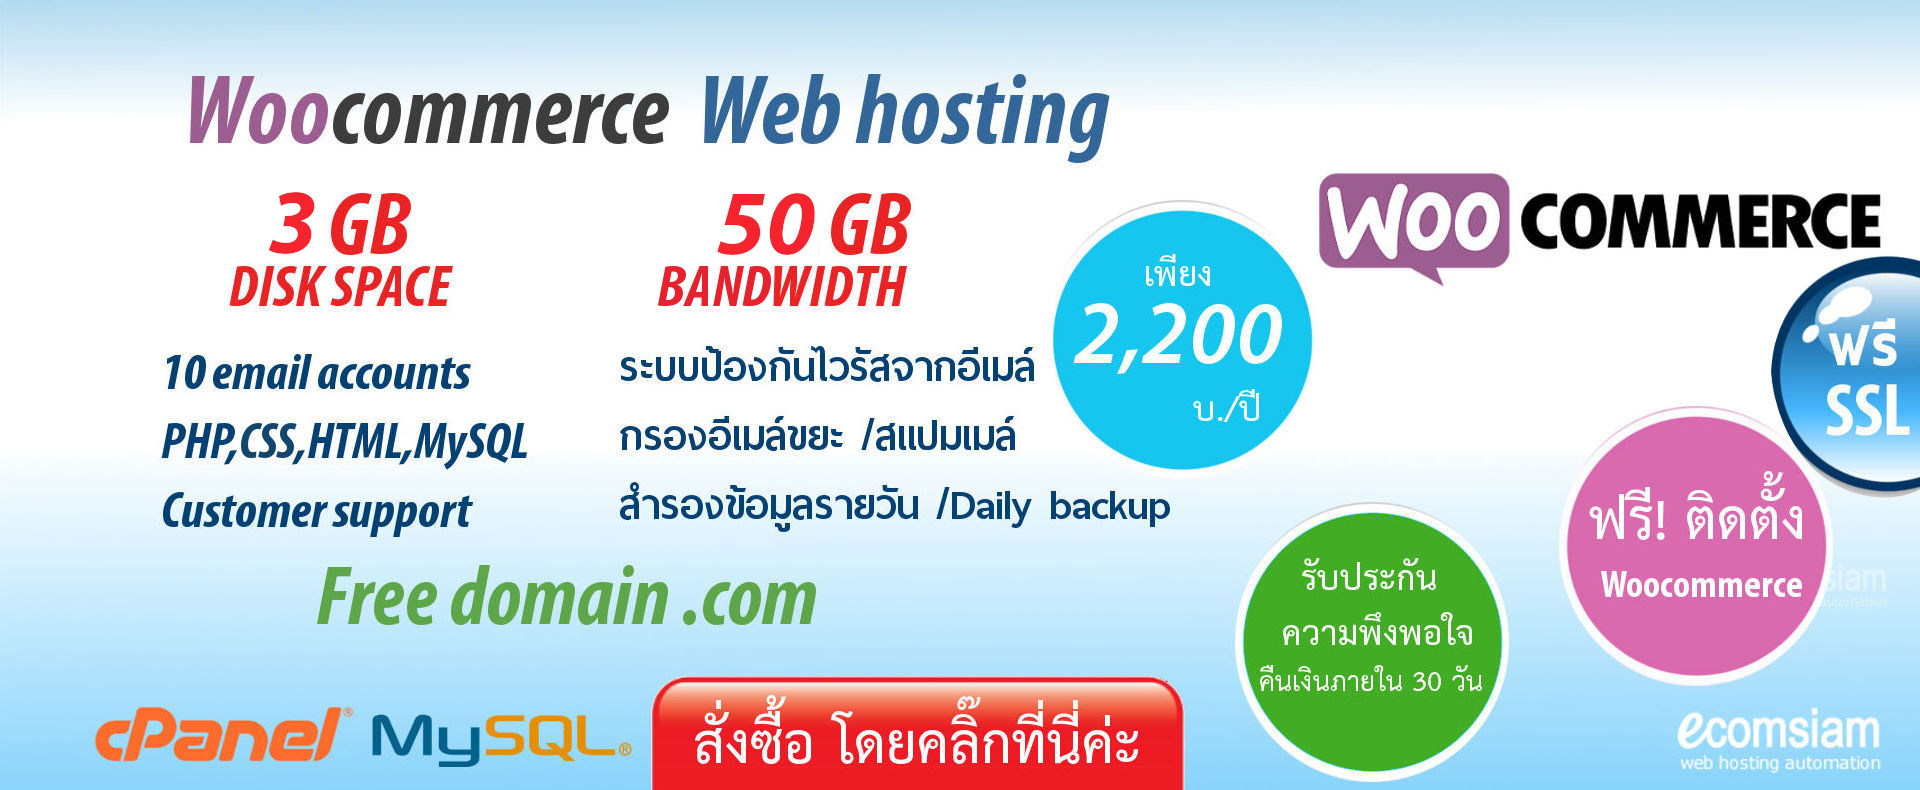 web hosting thailand บริการเว็บโฮสติ้ง ฟรีโดเมน ฟรี SSL -แนะนำ woocommerce web hosting thailand เว็บโฮสติ้งไทย ฟรี โดเมน ฟรี SSL - web hosting thailand free domain - woocommerce web hosting-banner